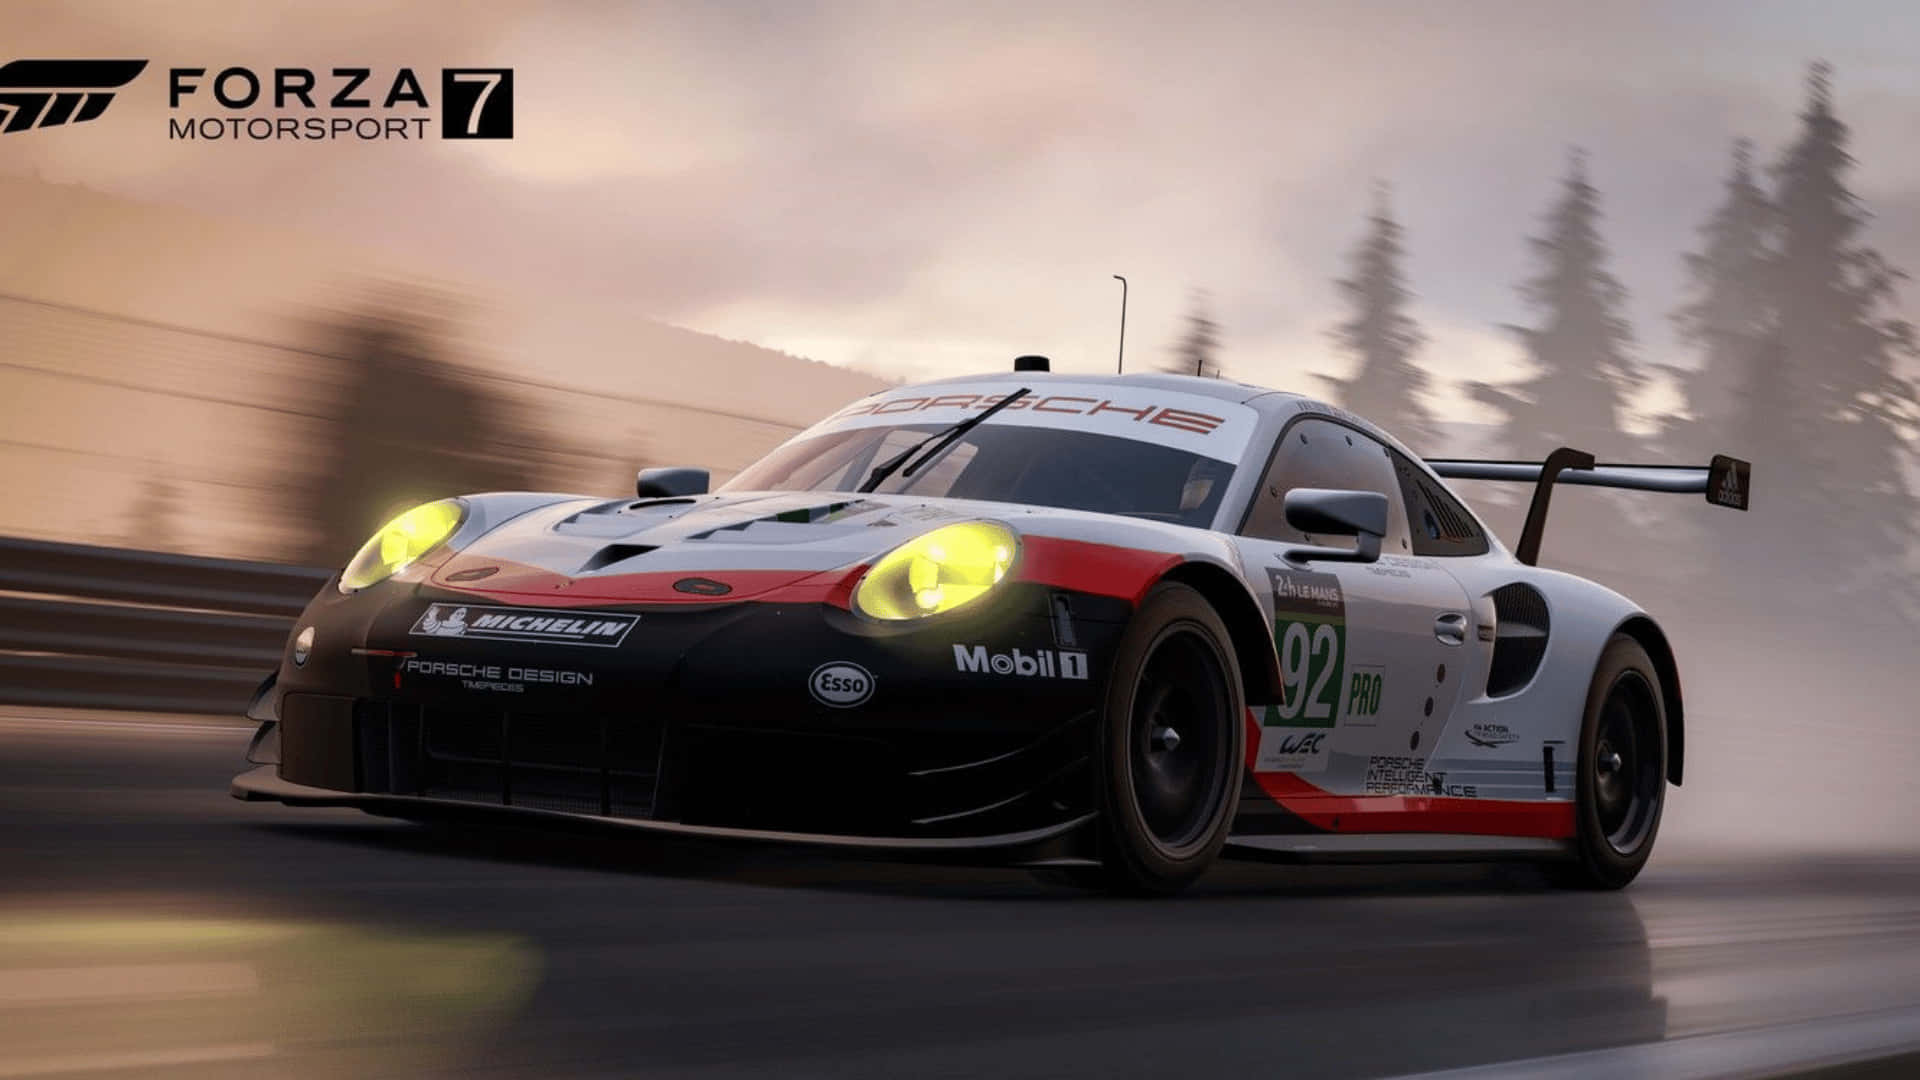 Sperimental'emozione Del Vero Motorsport Con Forza Motorsport 7